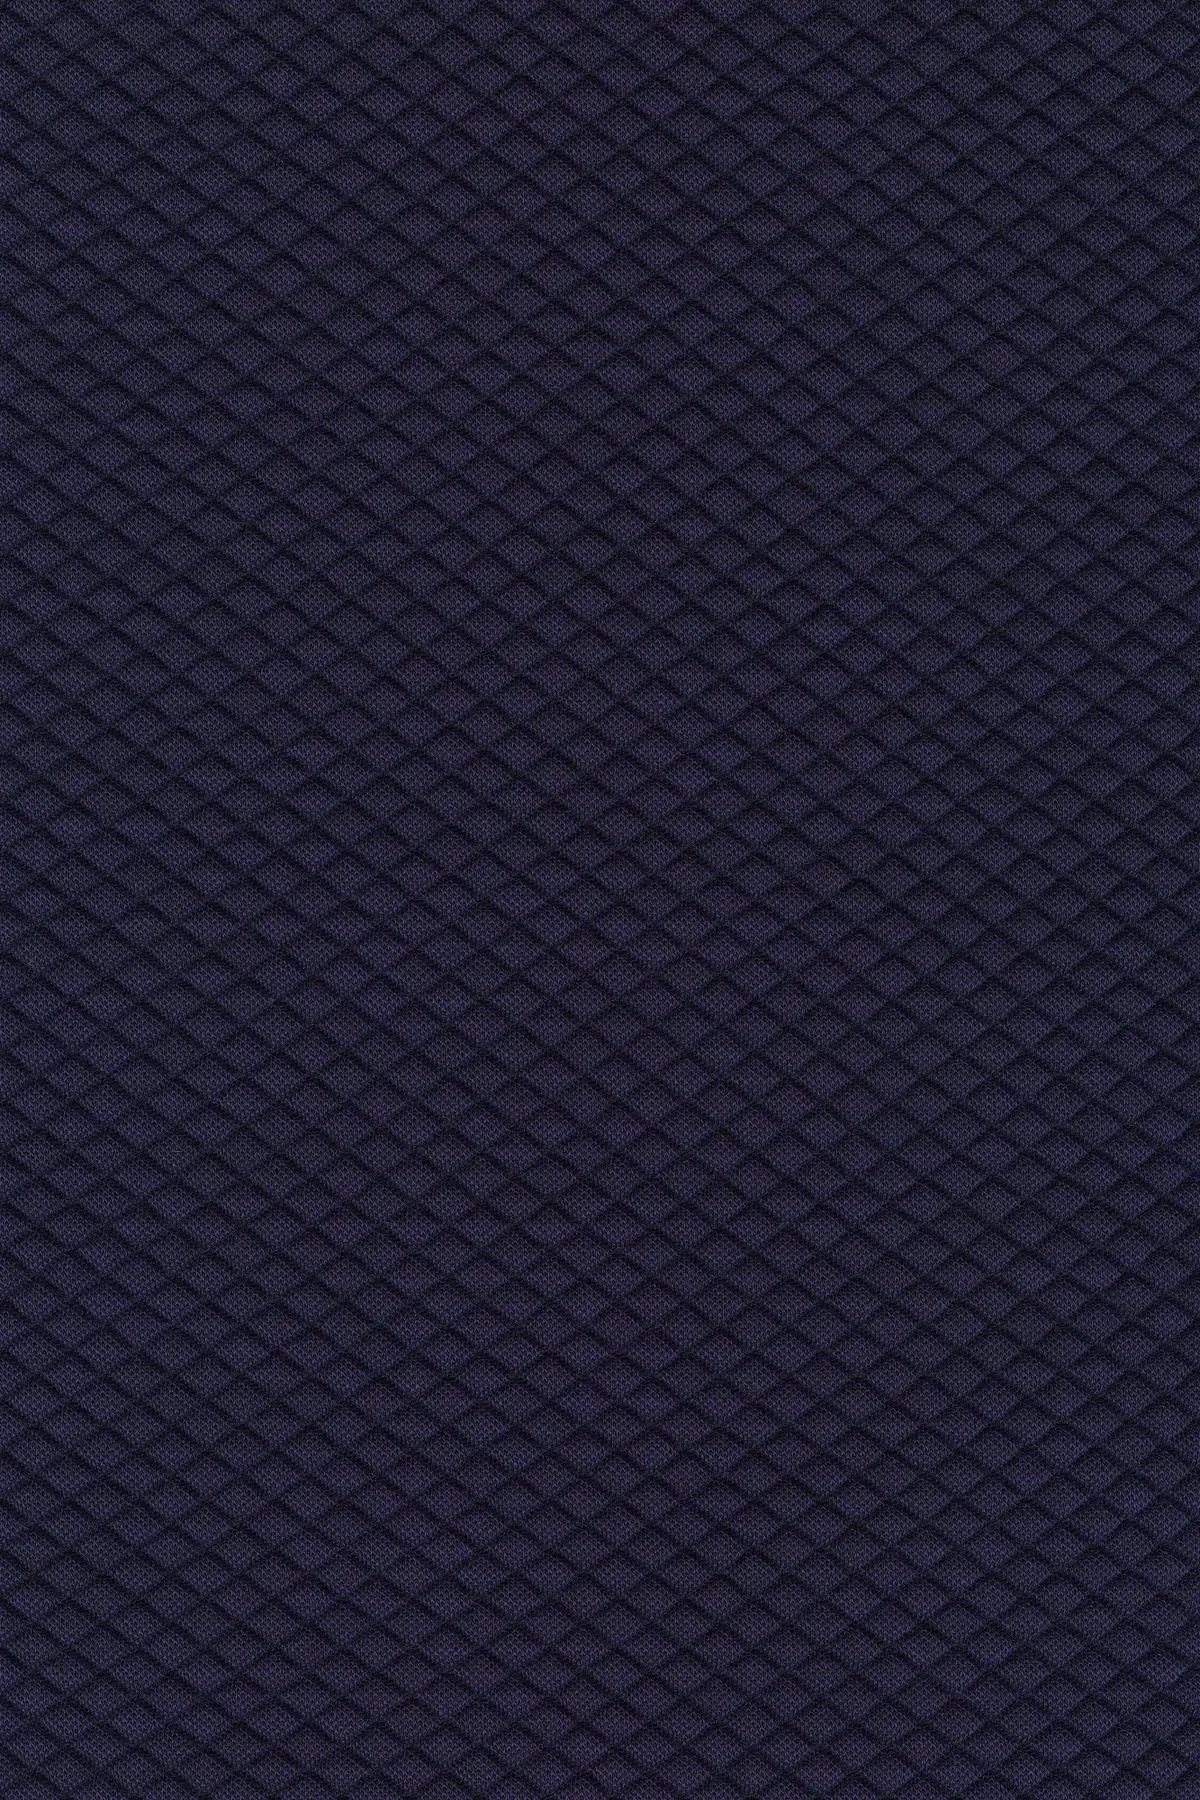 Fabric sample Mosaic 2 0672 purple